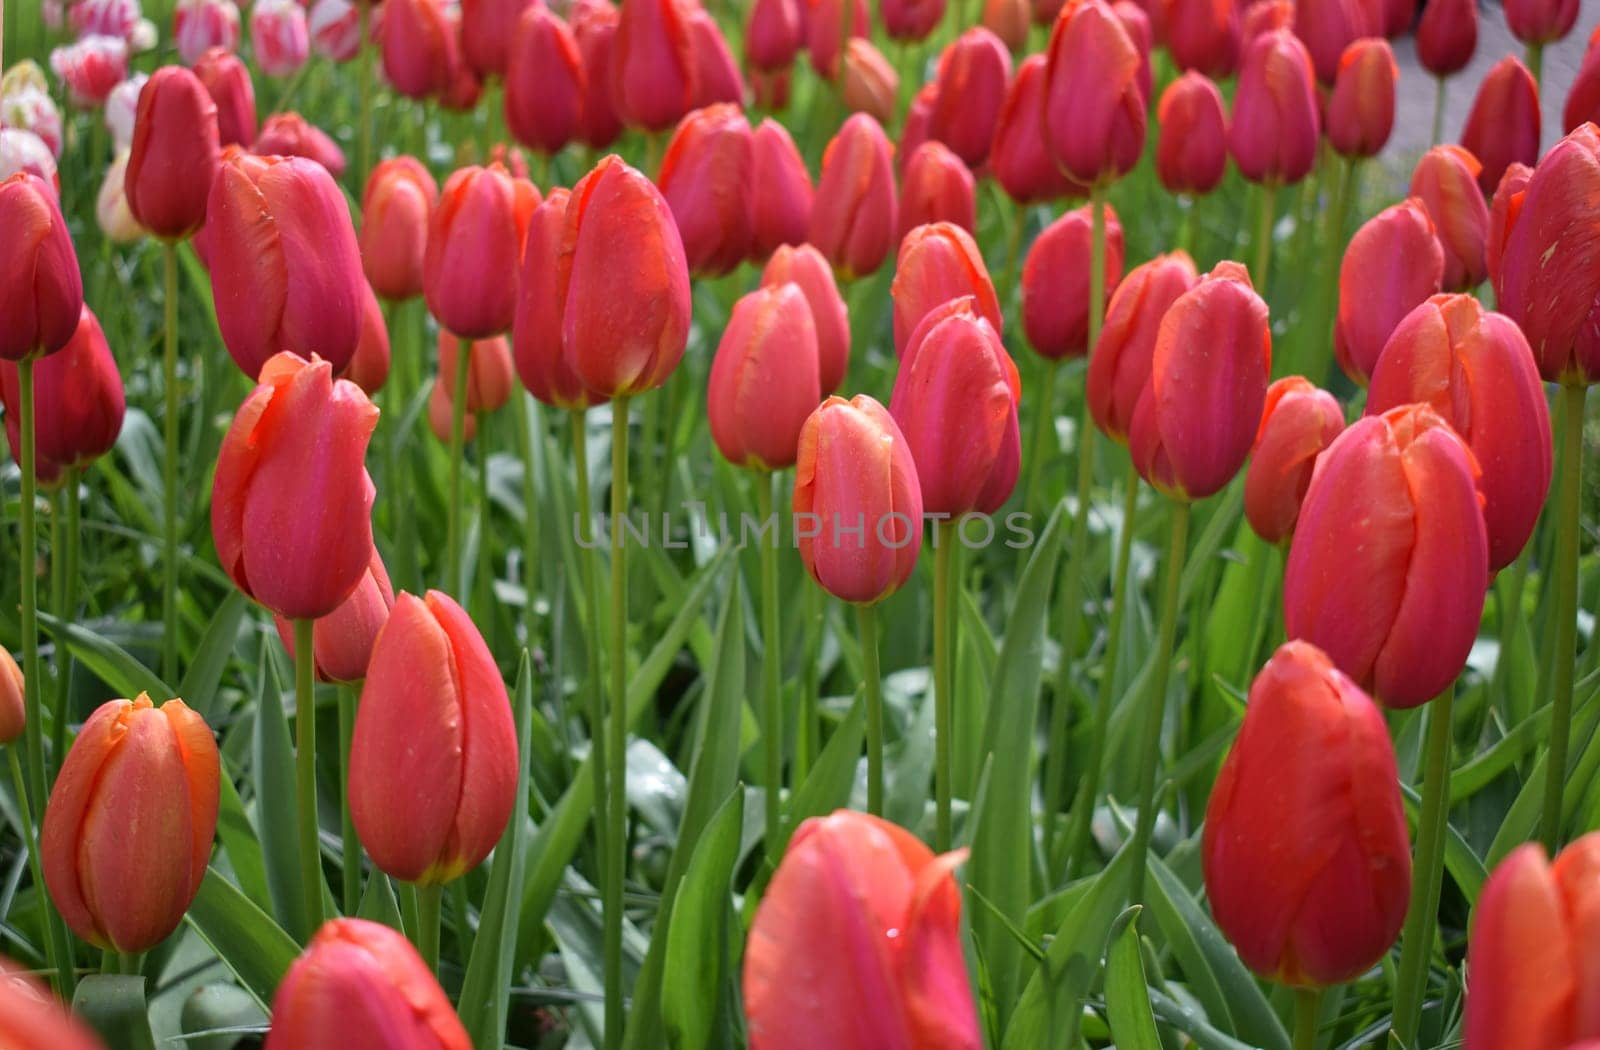 Field with beautiful red tulips by artemisagajda